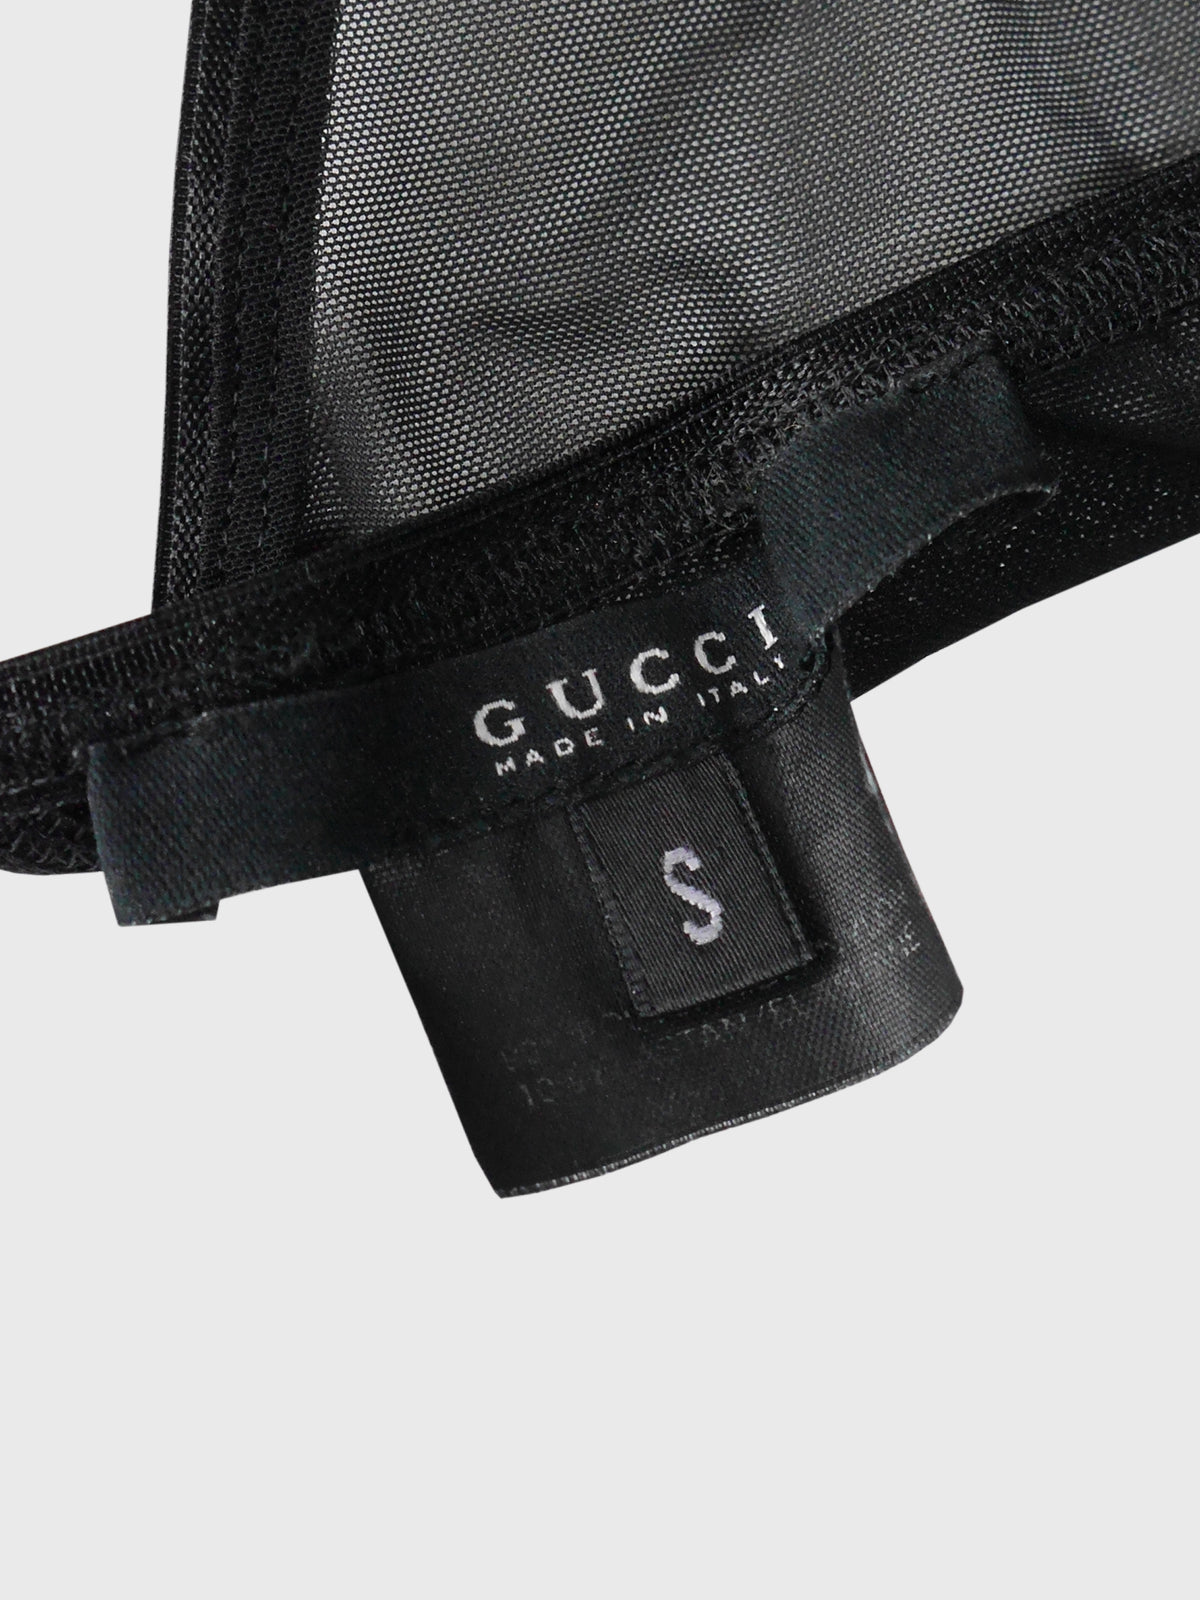 GUCCI by TOM FORD Vintage Black Mesh Underwear Lingerie Set Logo G-String Thong & Bra